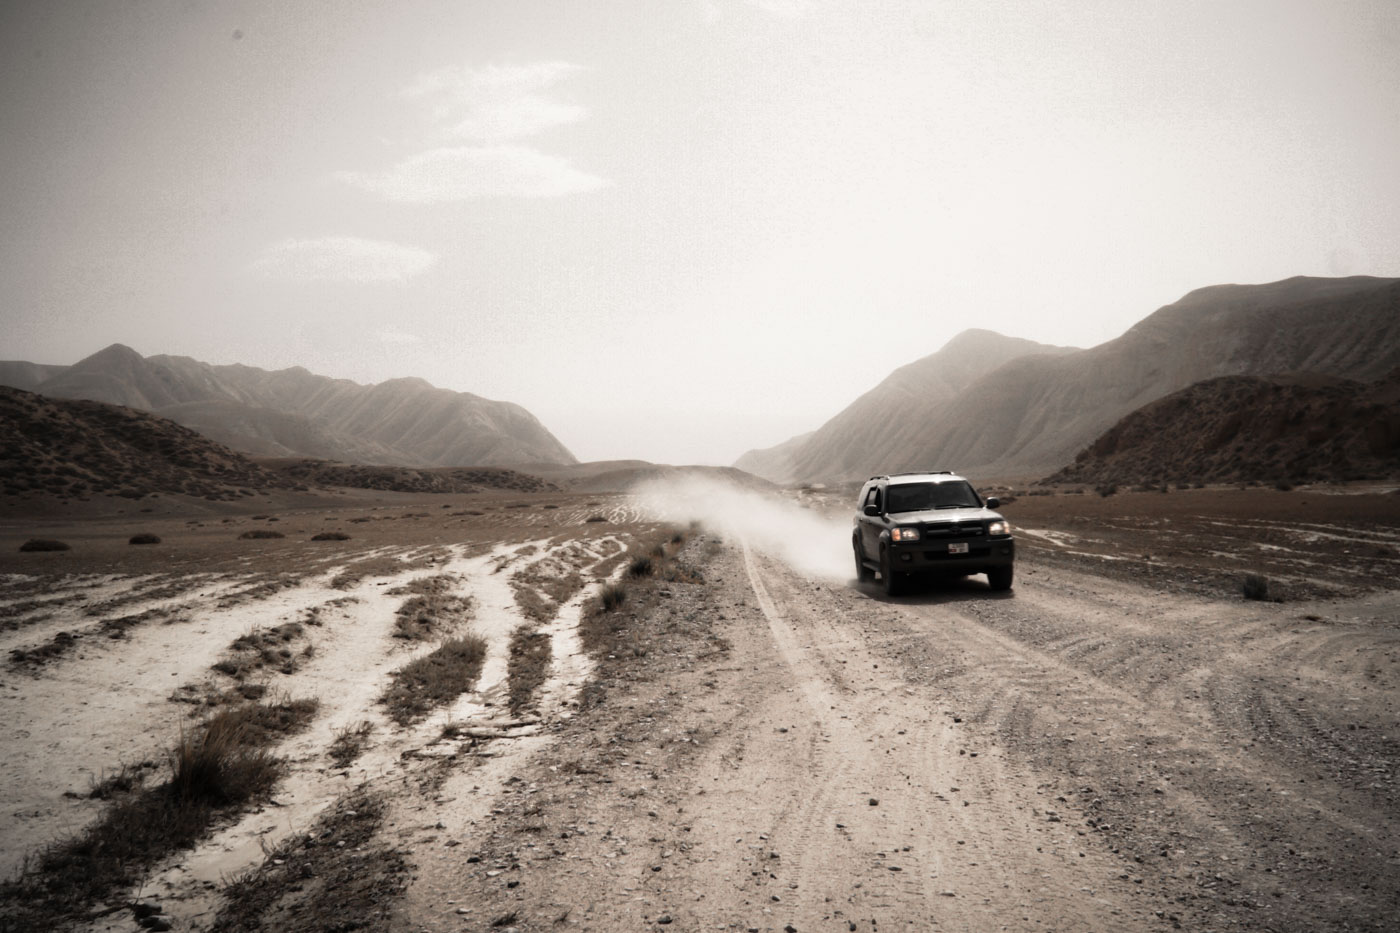 Driving in Kyrgyzstan through dirt roads in between mountains